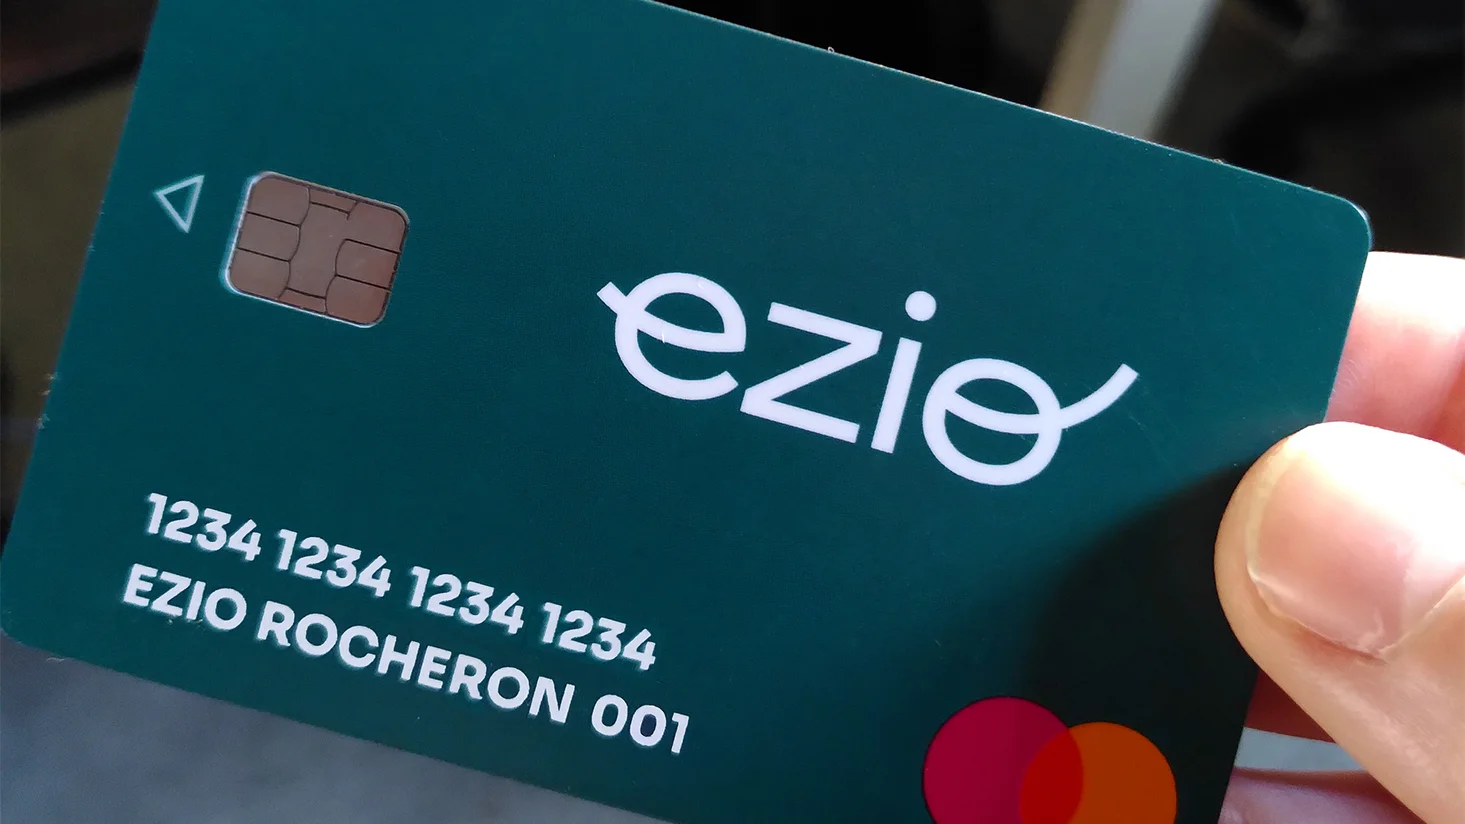 Credit card flocked with Ezio's logotype